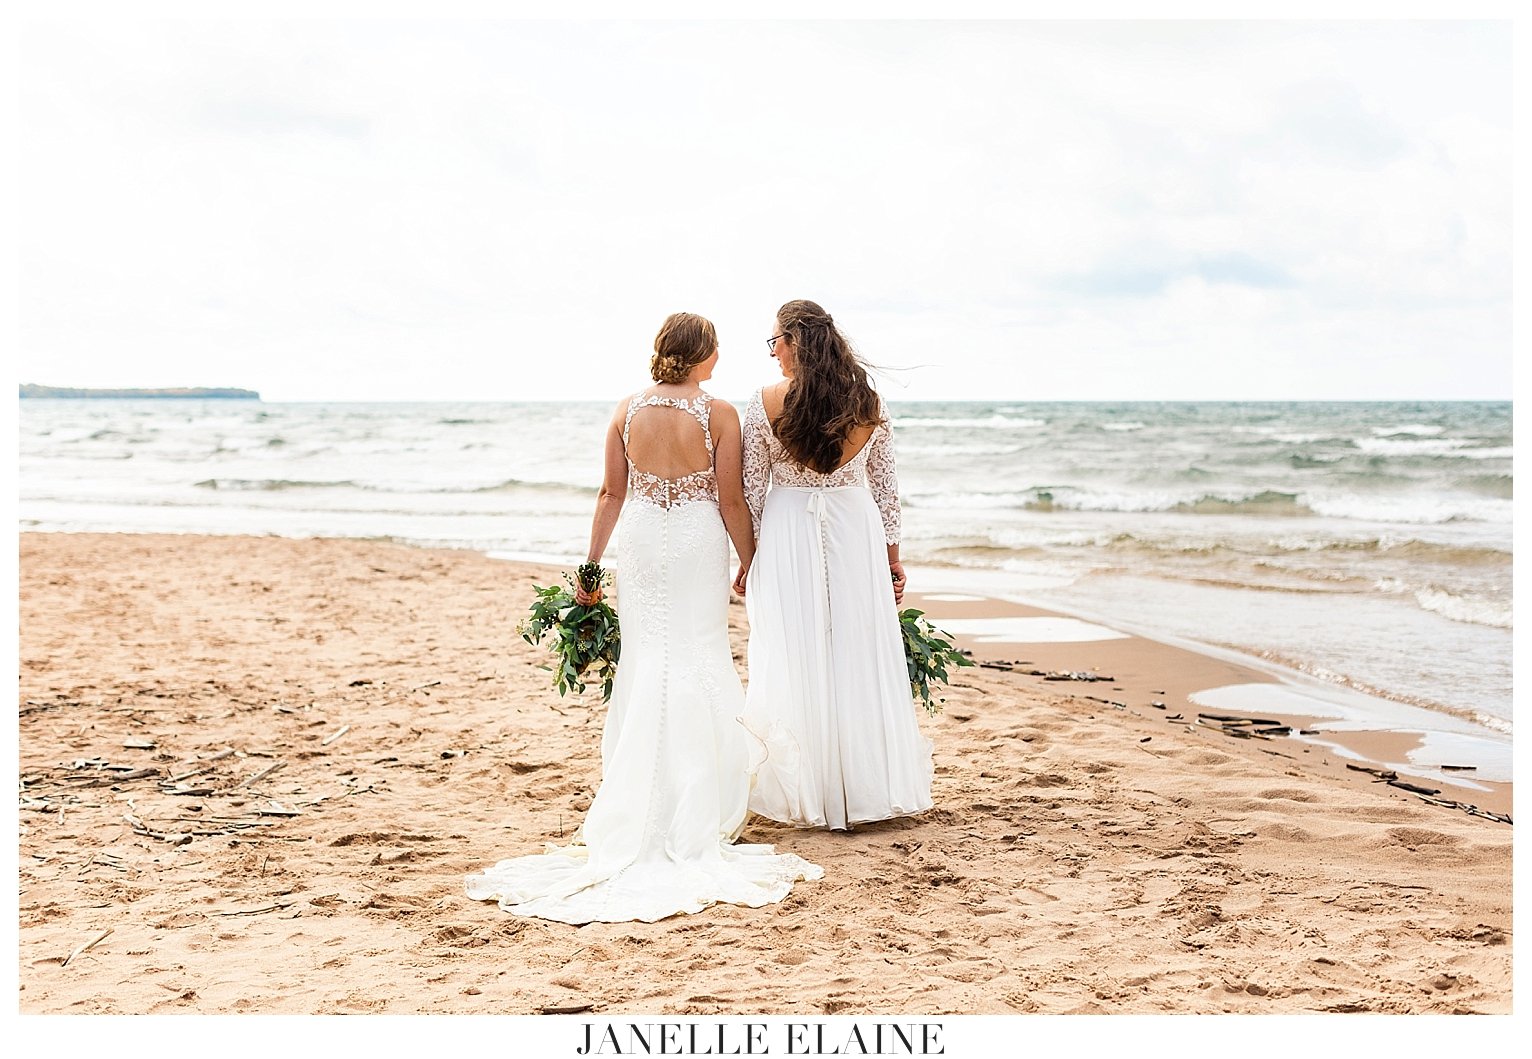 bailey-and-meg-wedding-twin lakes-mi-janelle-elaine-photography-1-2.jpg